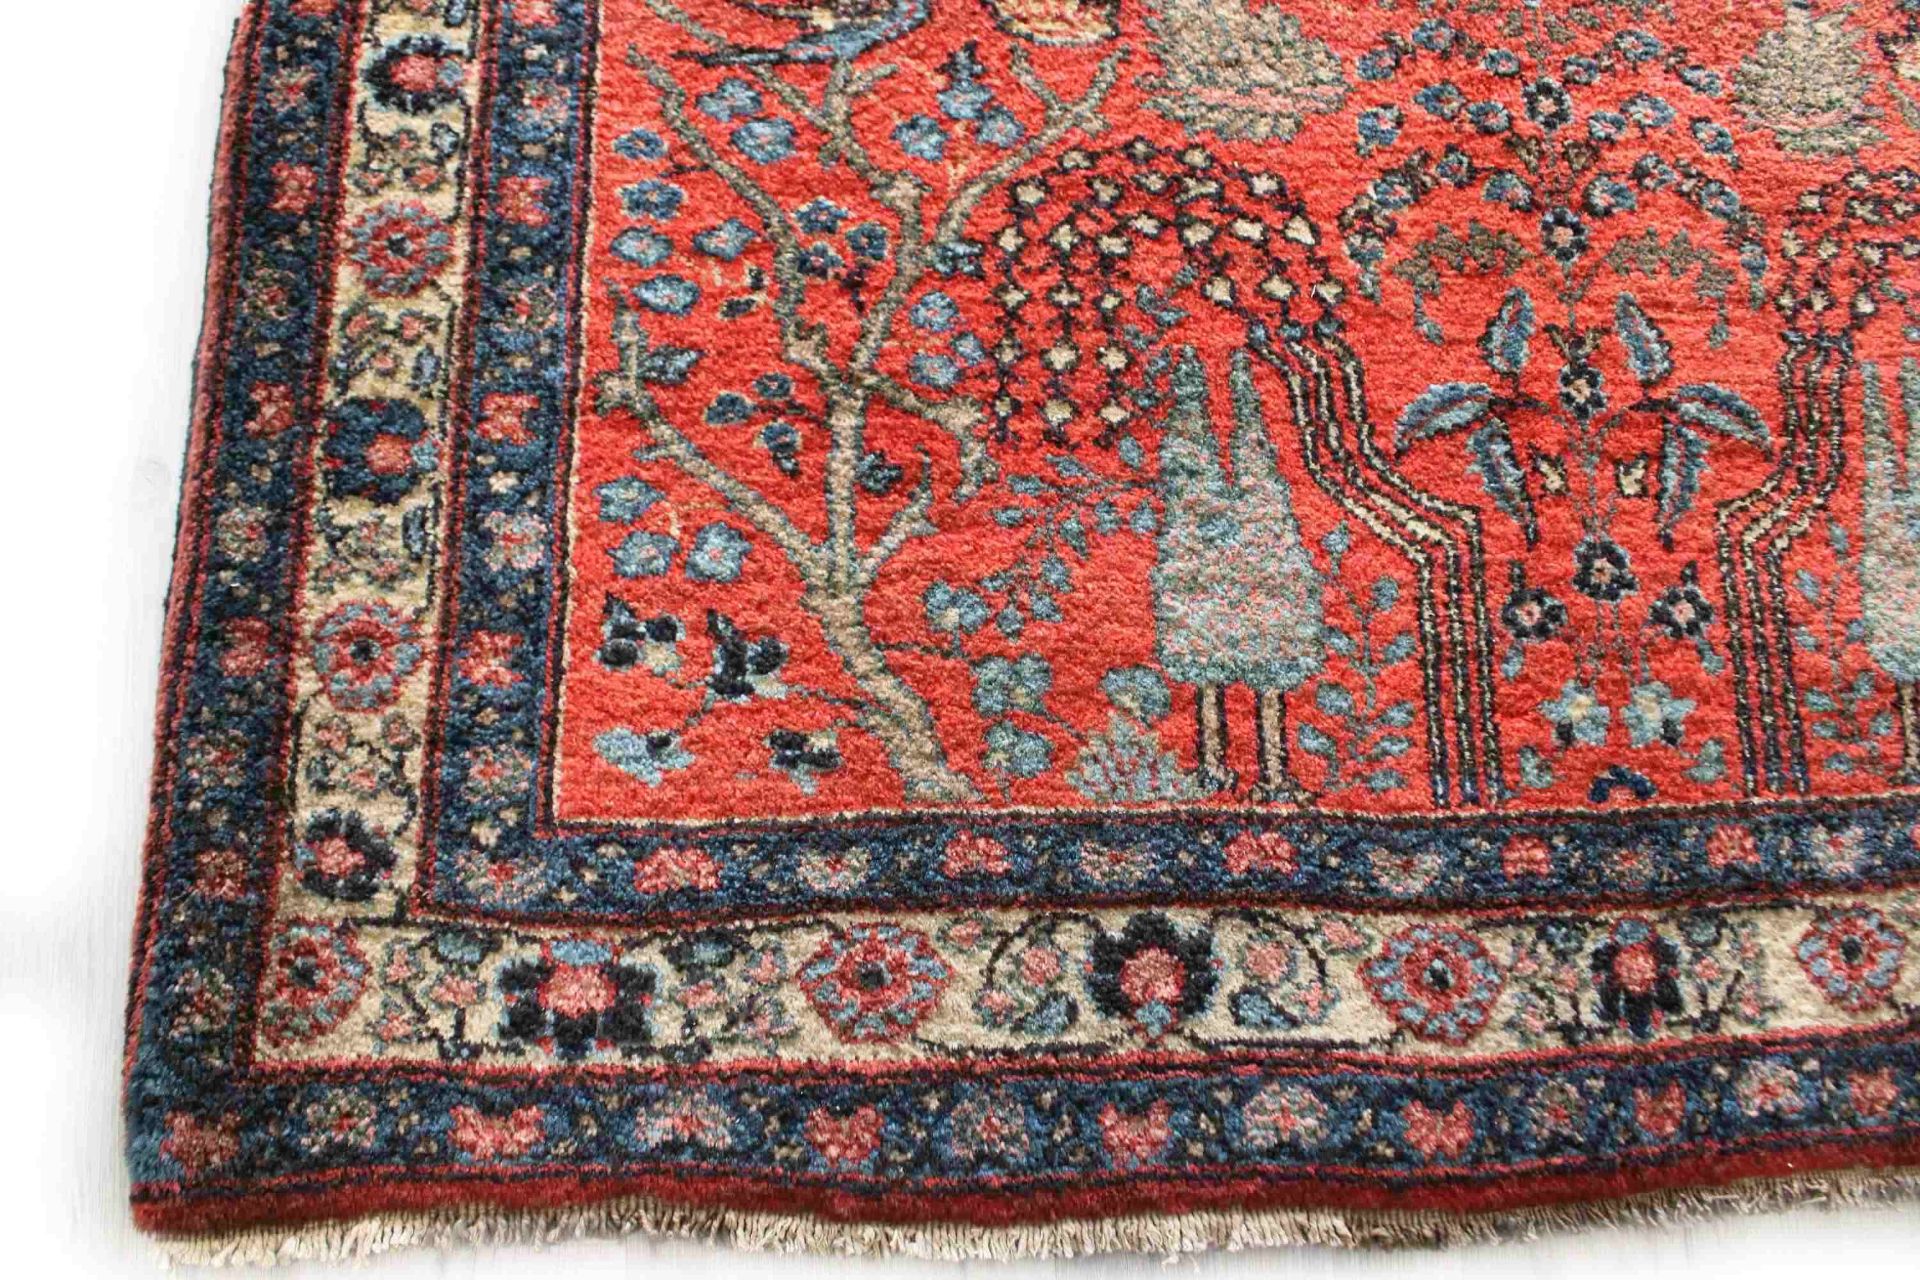 Kermanshah-Teppich, Maße: 140 x 189 cm. Guter Zustand, Abnutzungsspuren am Rand. - Image 2 of 3